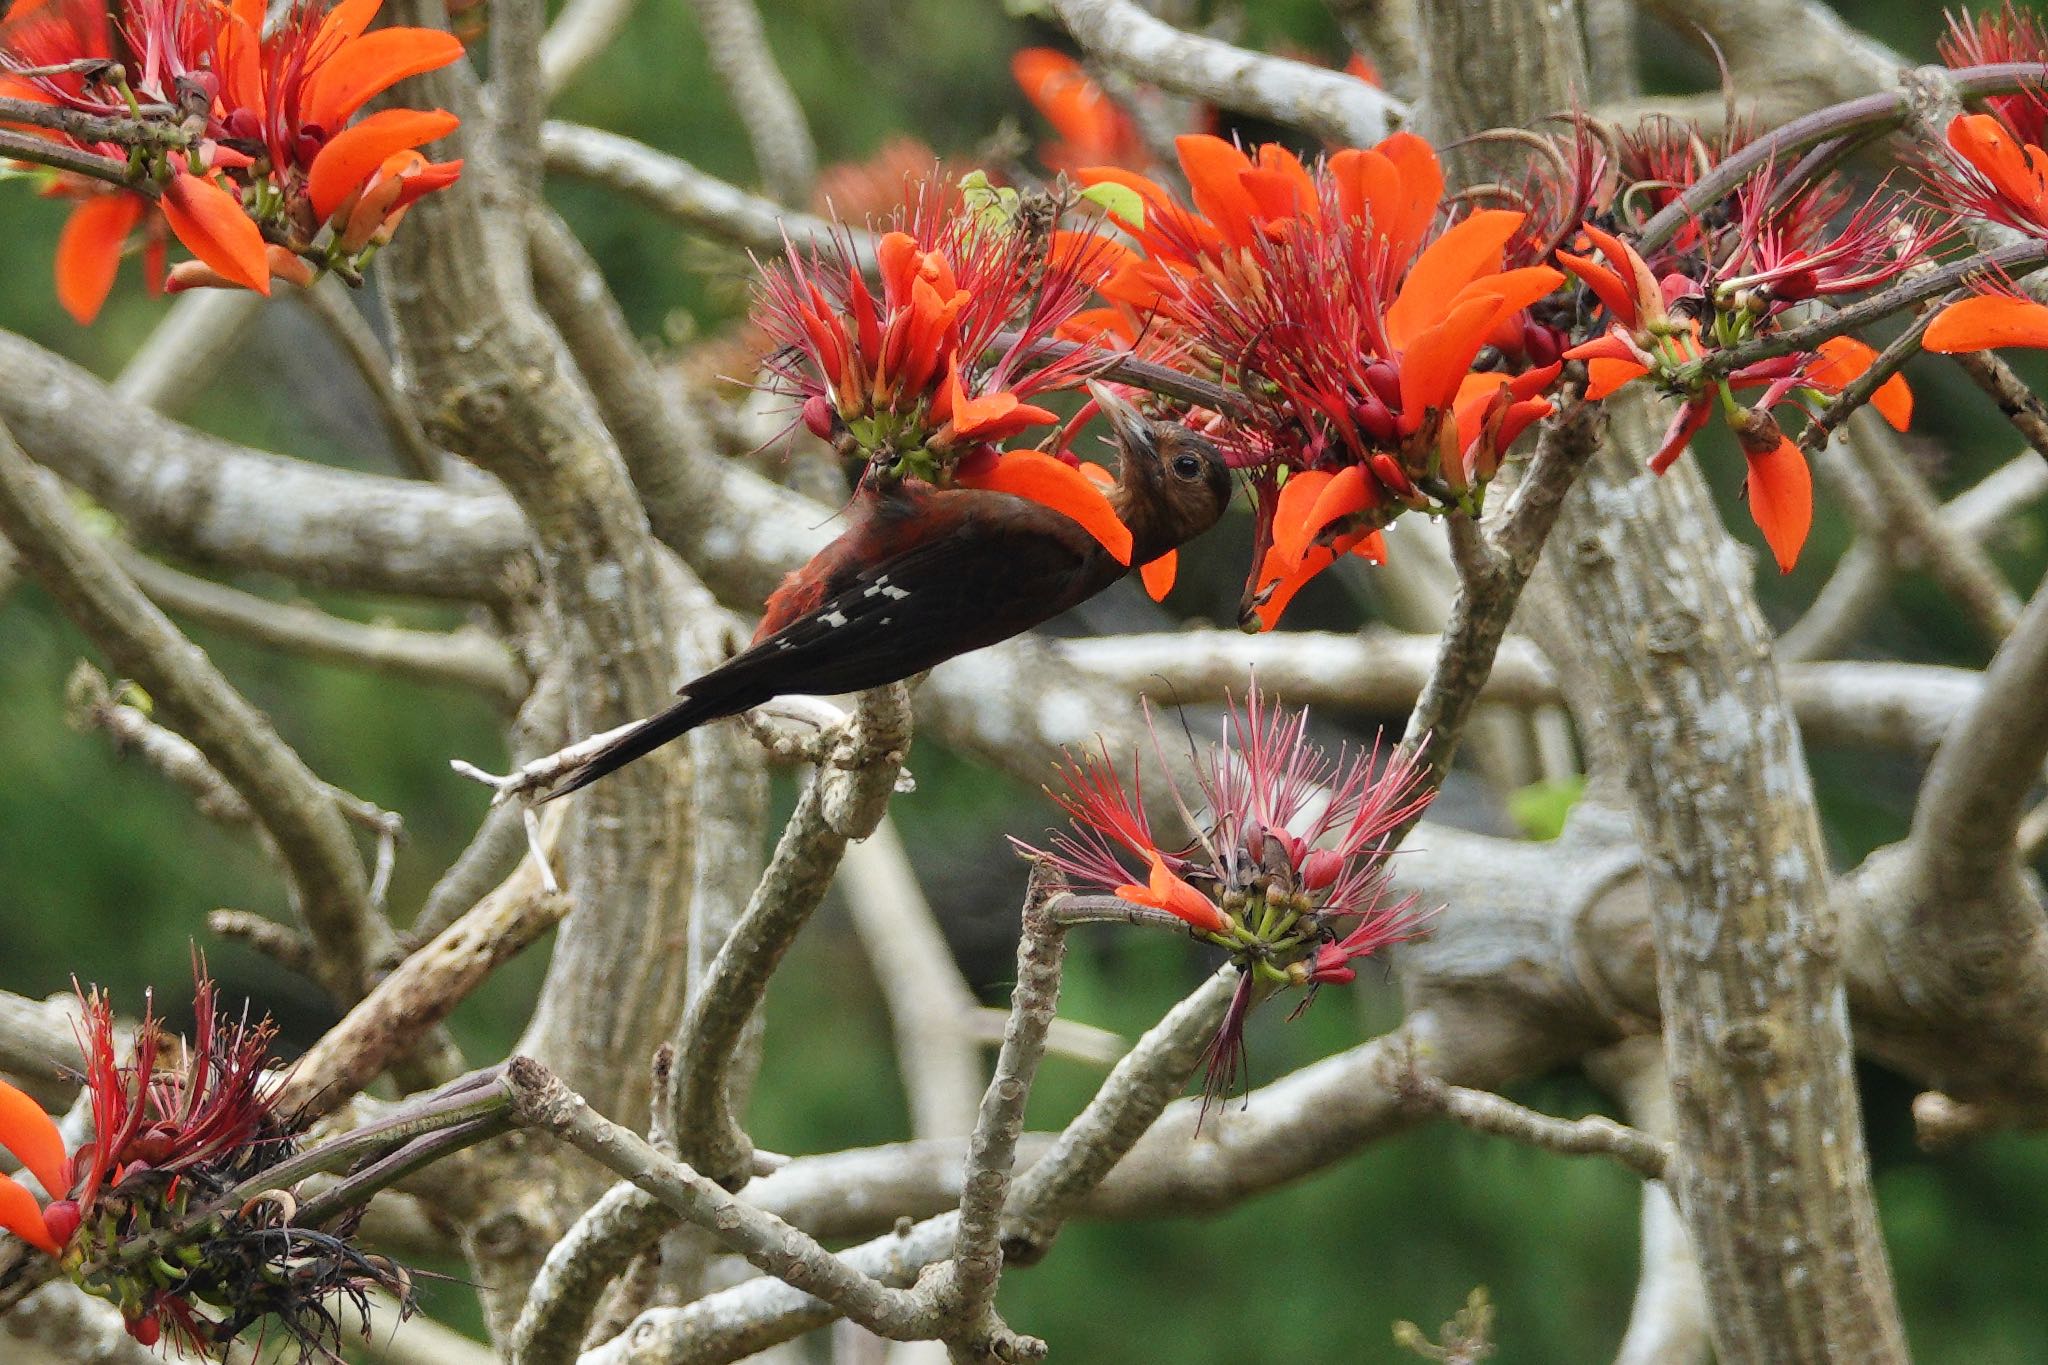 Okinawa Woodpecker